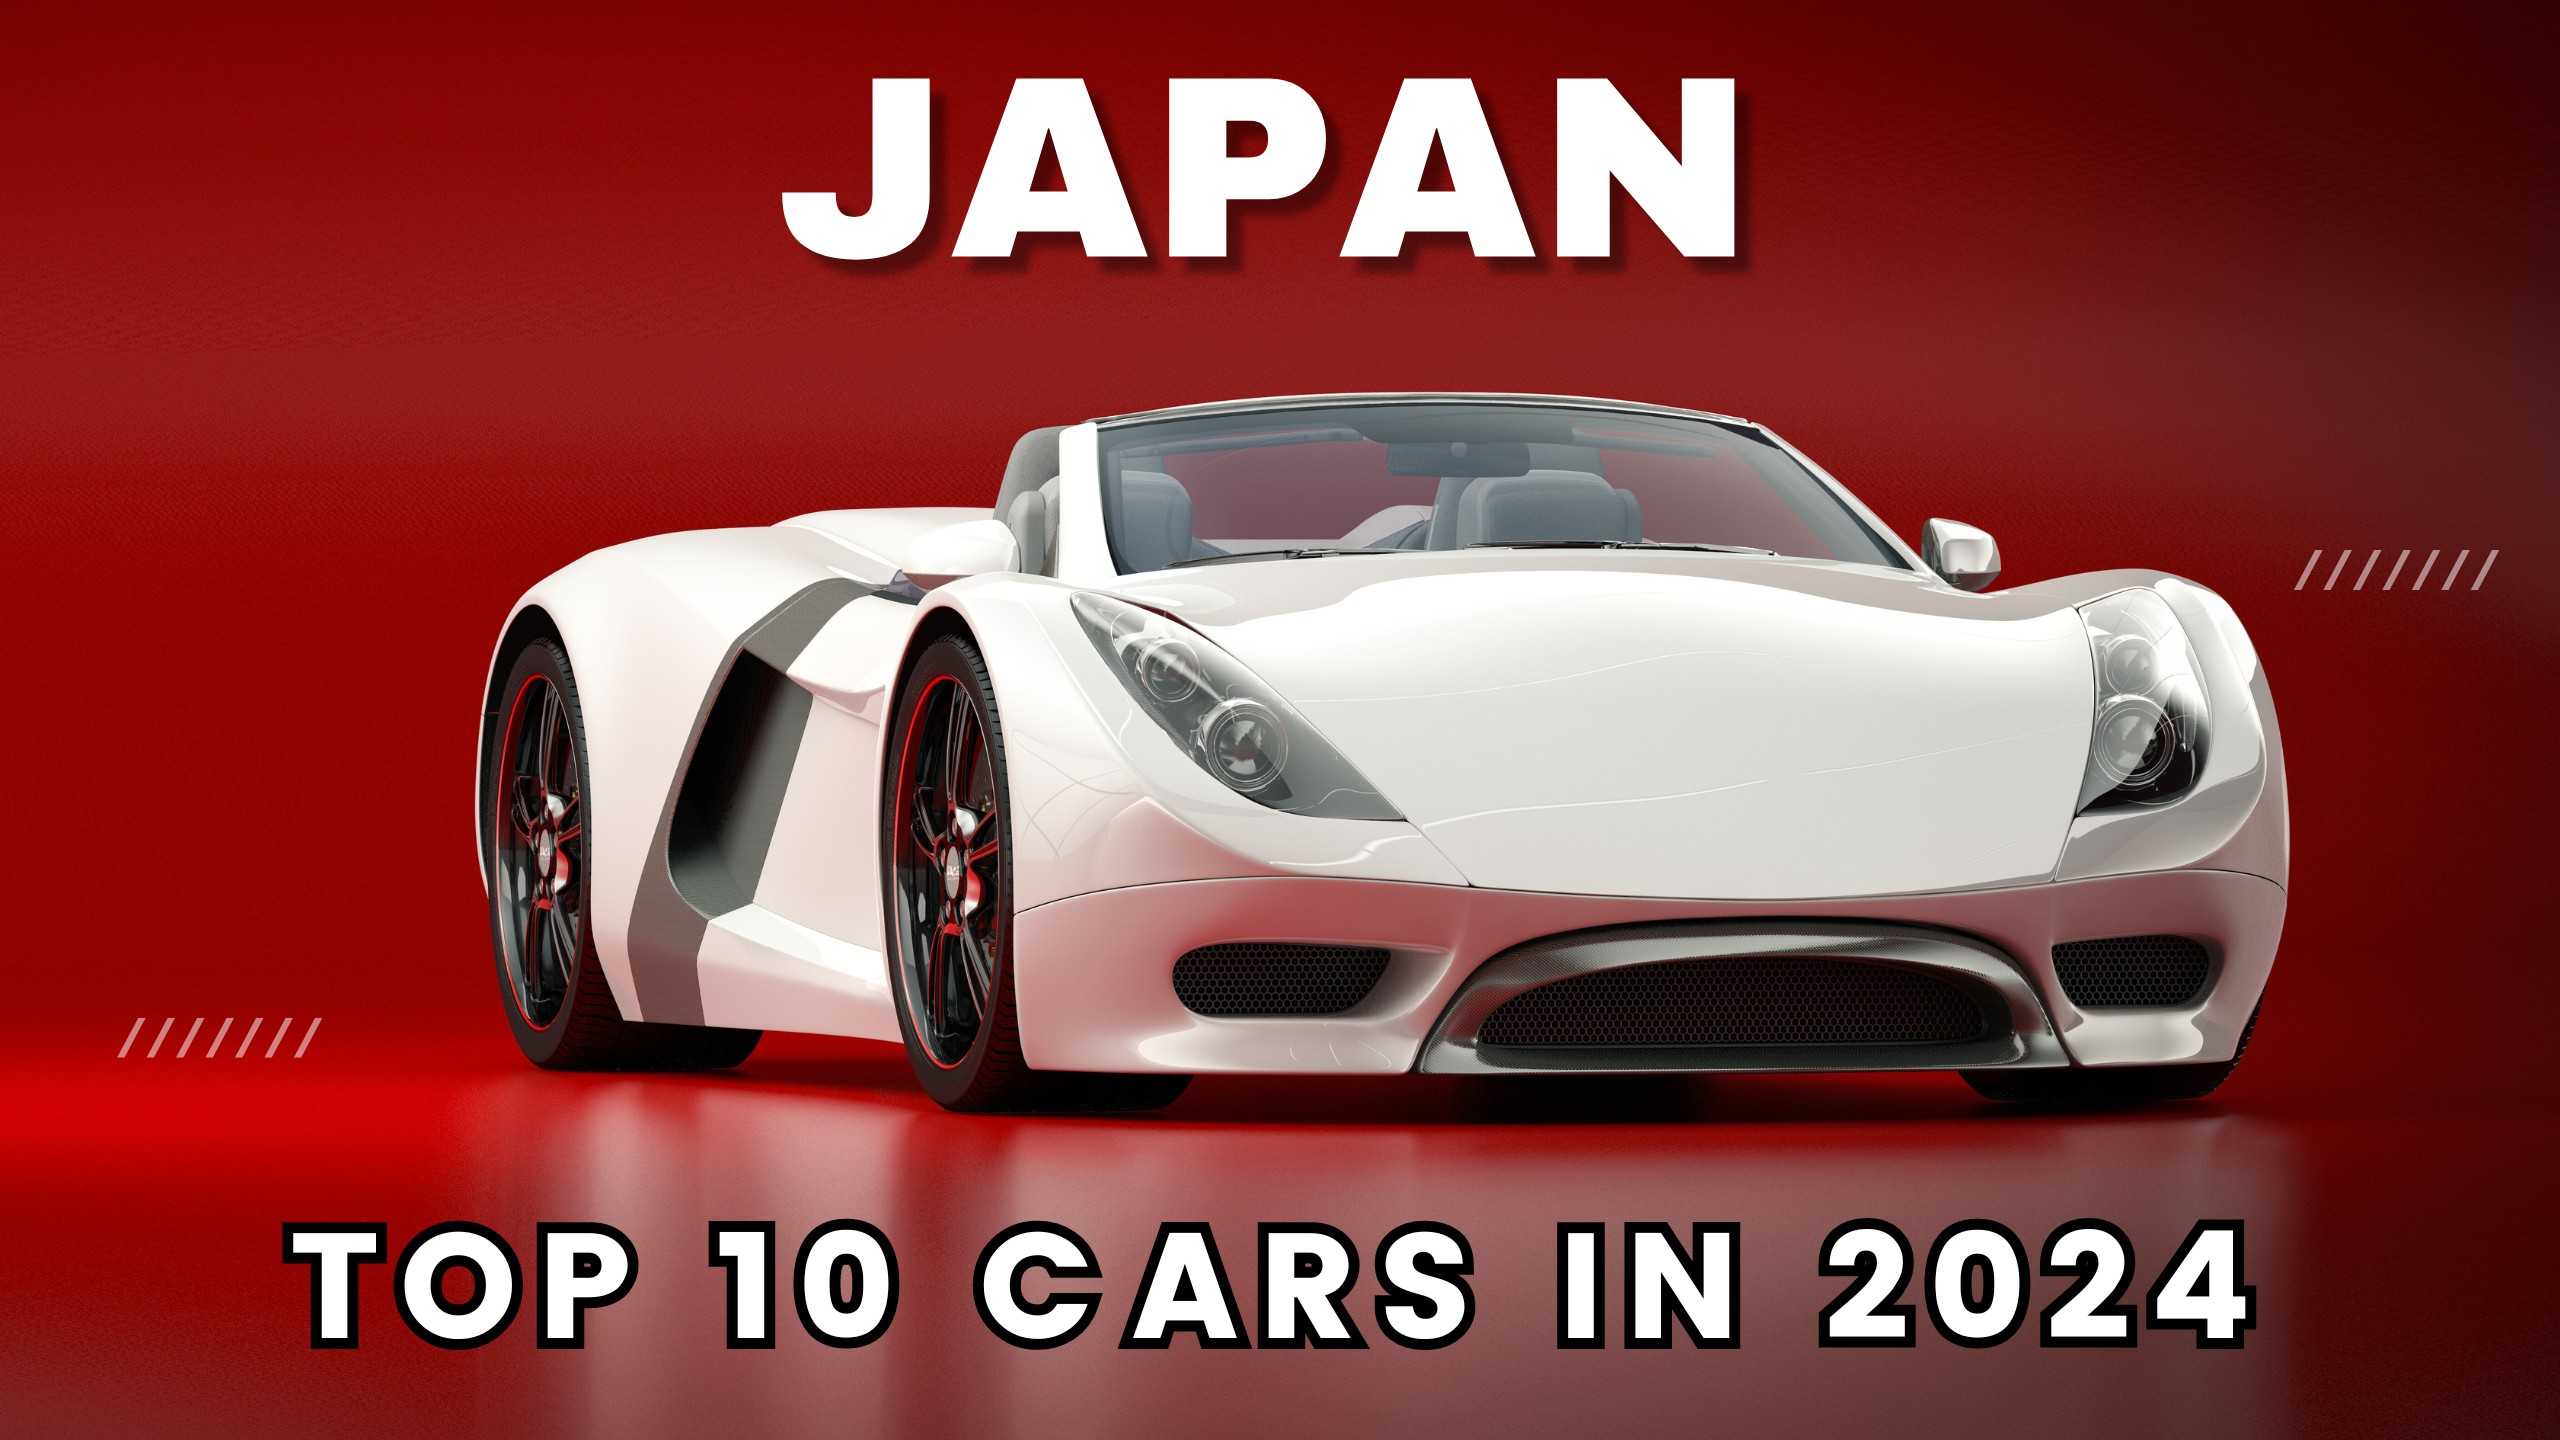 Japan Top 10 Cars in 2024 (1)